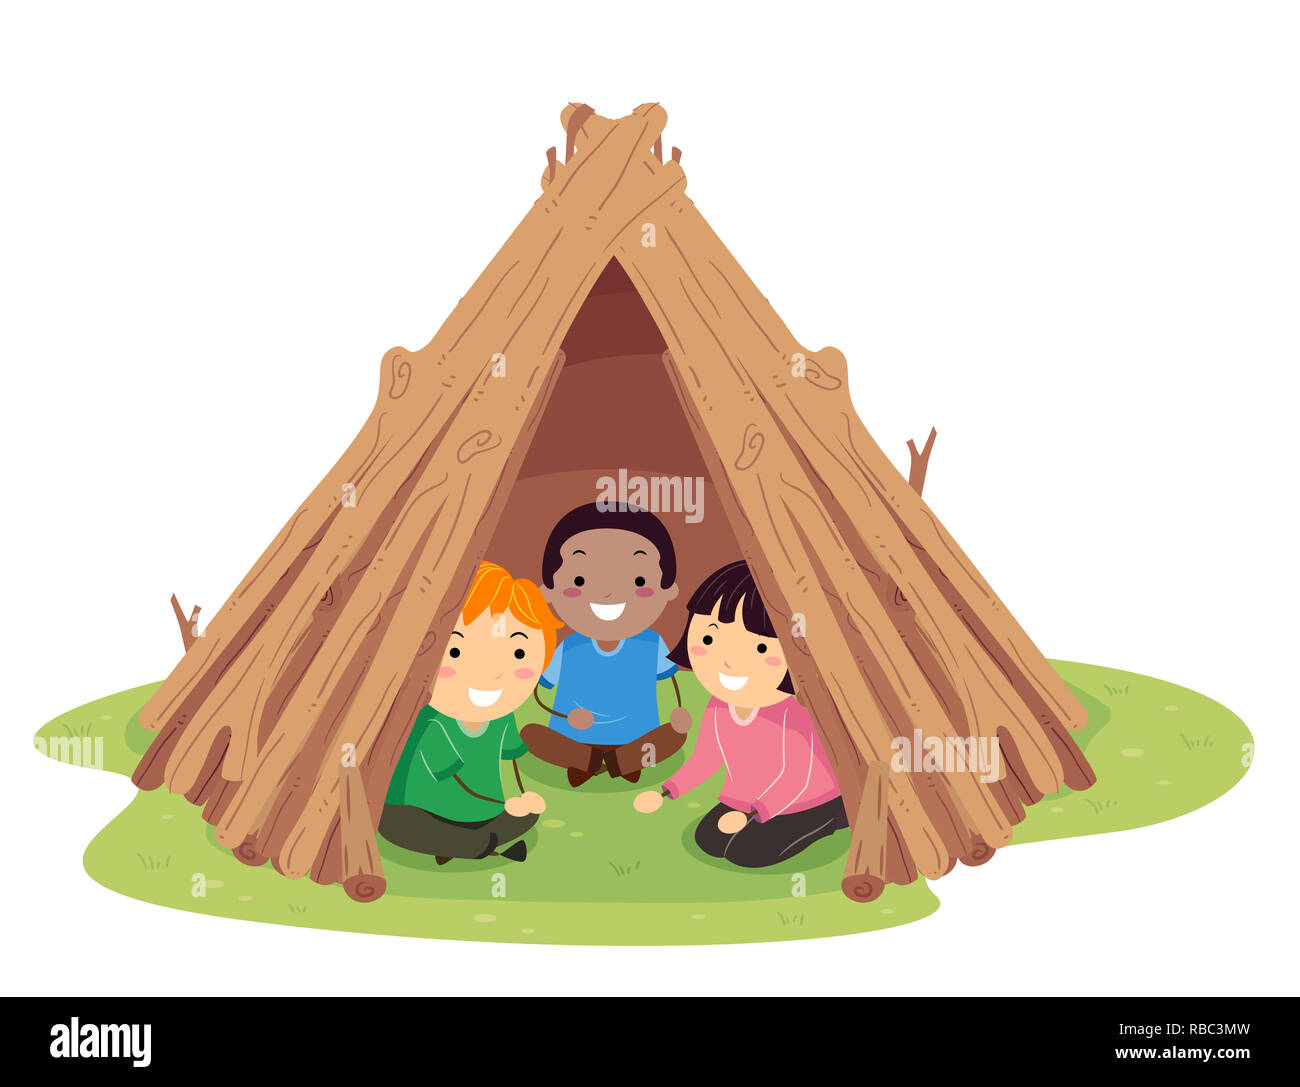 Illustration of Stickman Kids Playing Inside a Backyard Garden Teepee Stock Photo